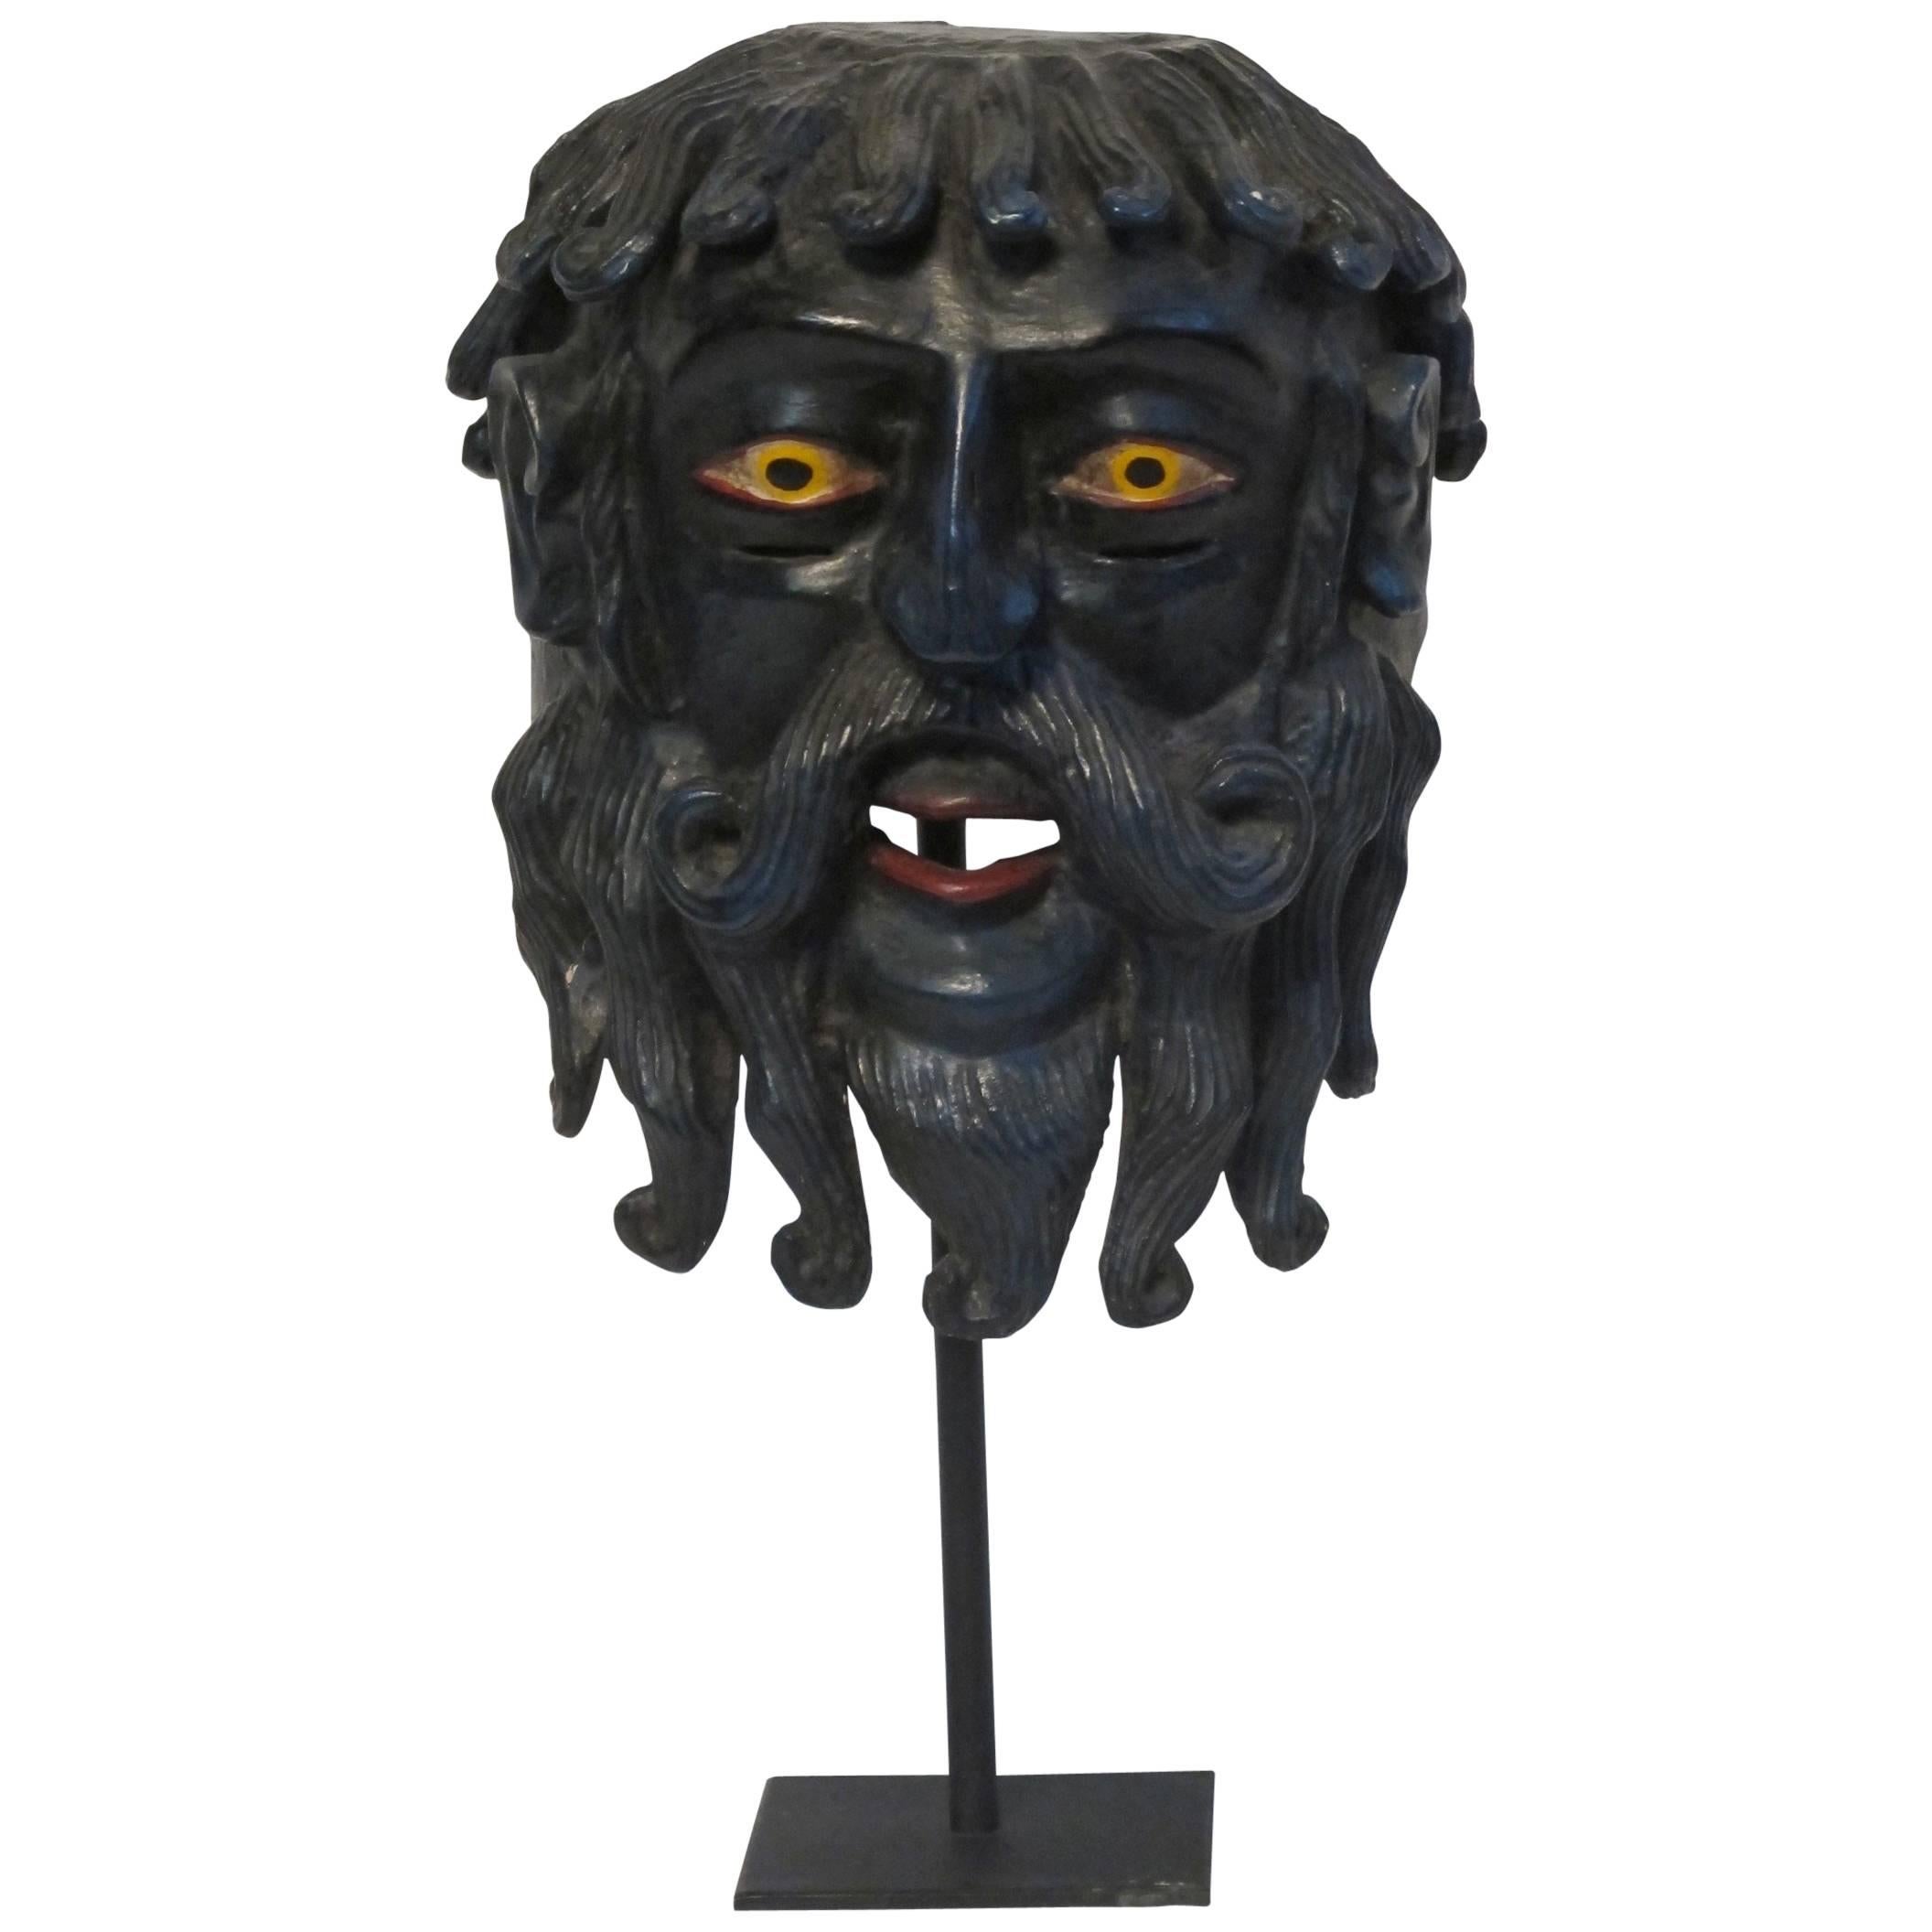 Mexican Helmut Mask of Poseidon